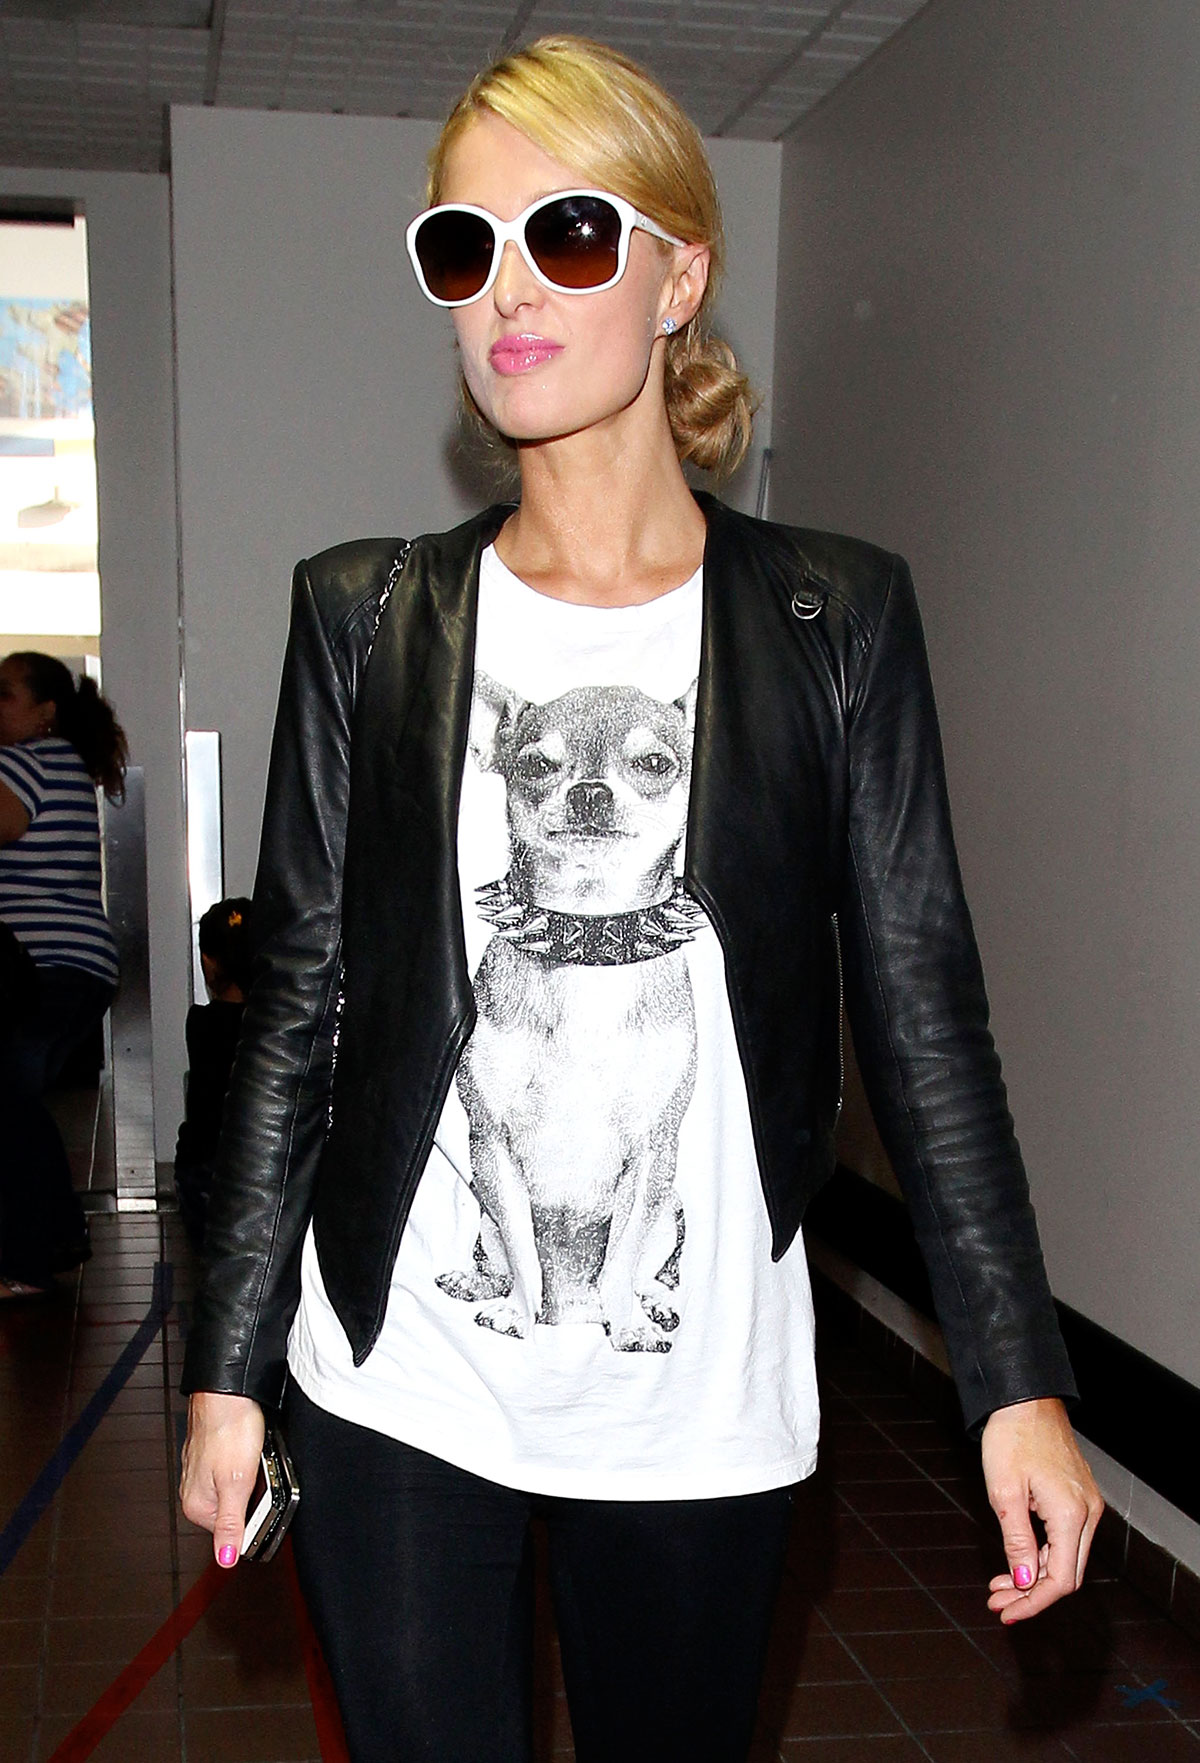 Paris Hilton walking through LAX airport